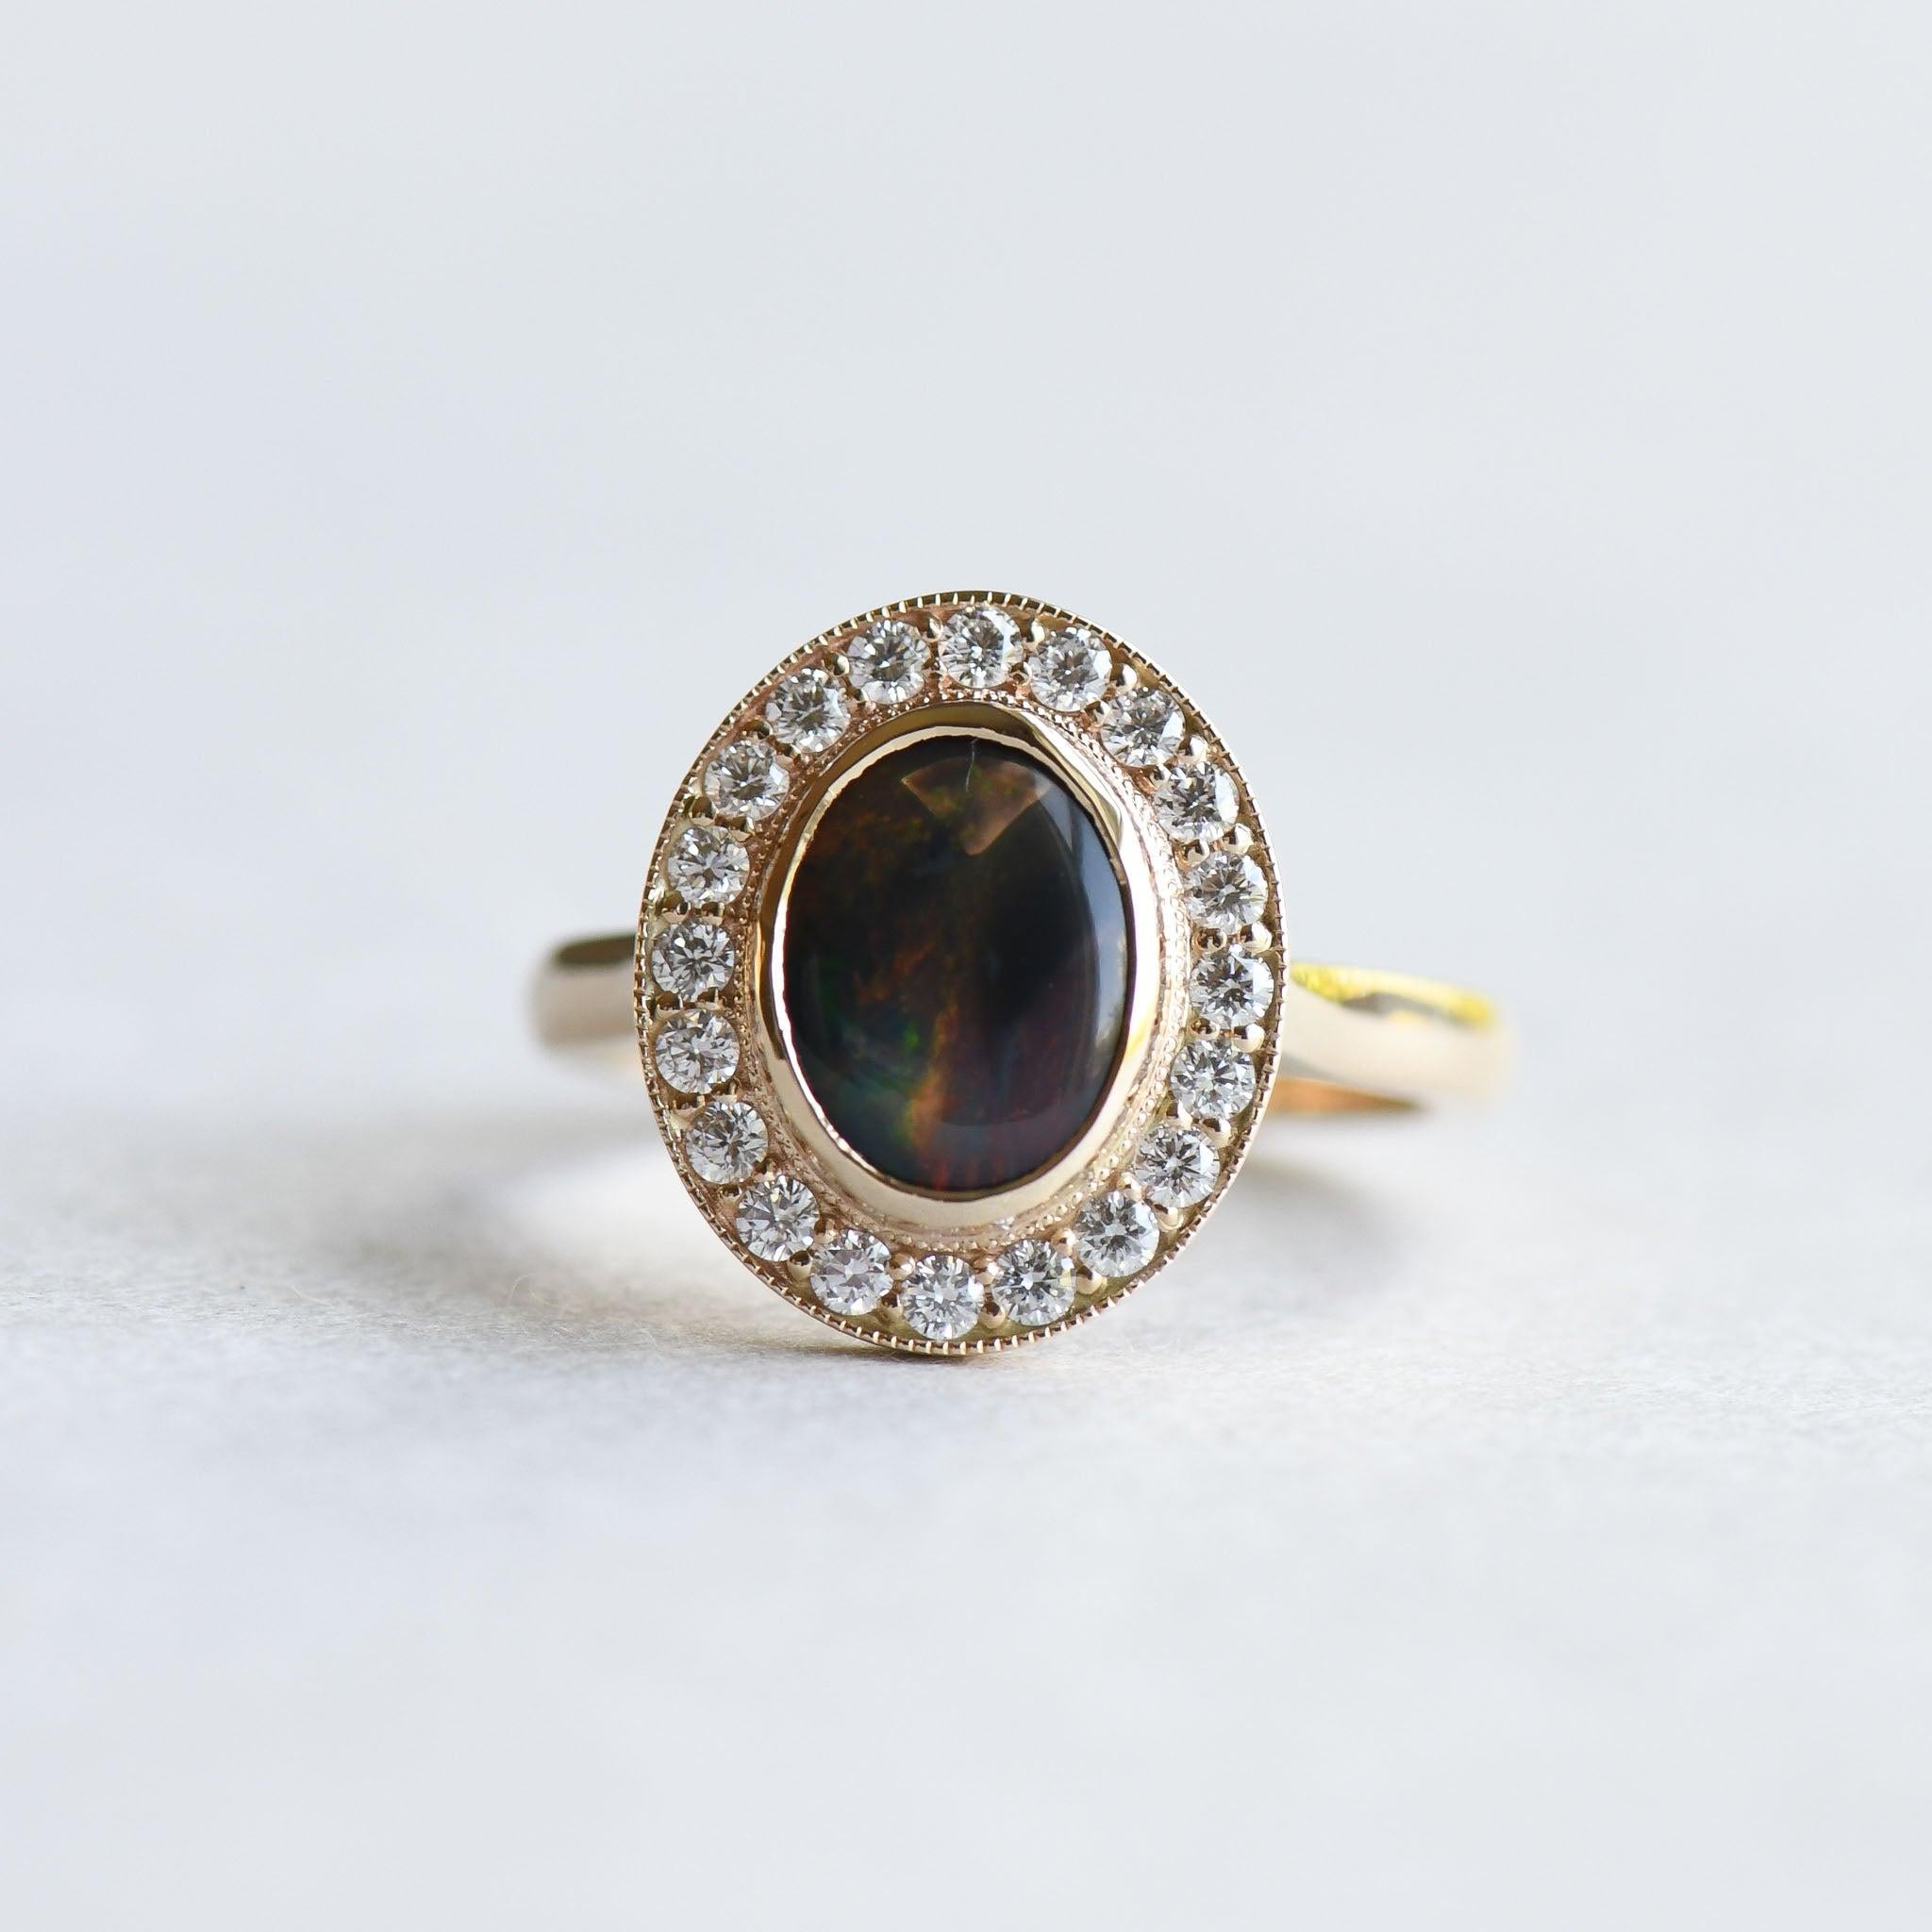 For Sale:  Australian Black Opal 1.188 Carat Ring, 14 Karat Gold Halo Ring 3